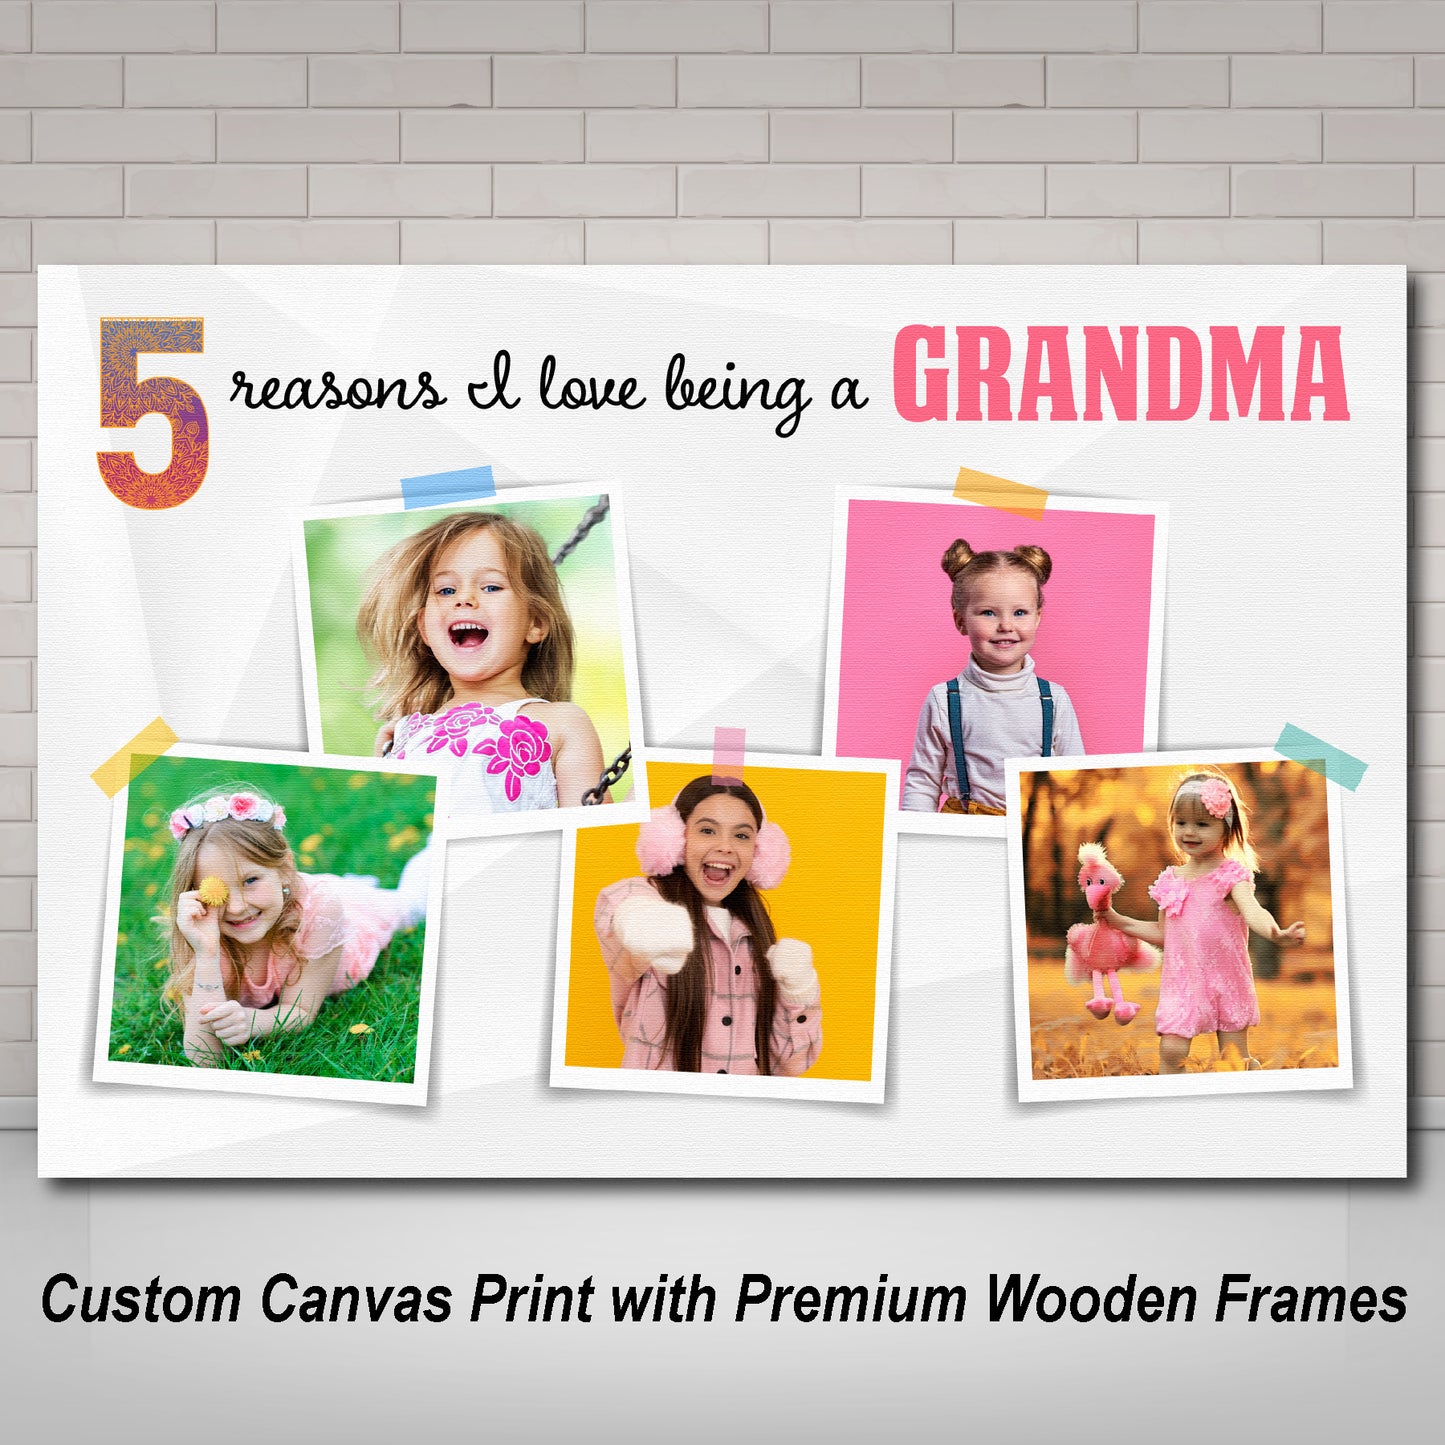 Reasons I love being a grandma canvas, custom canvas print, custom gift, custom canvas, custom canvas prints, custom photo canvas, custom canvas wall art, custom family canvas